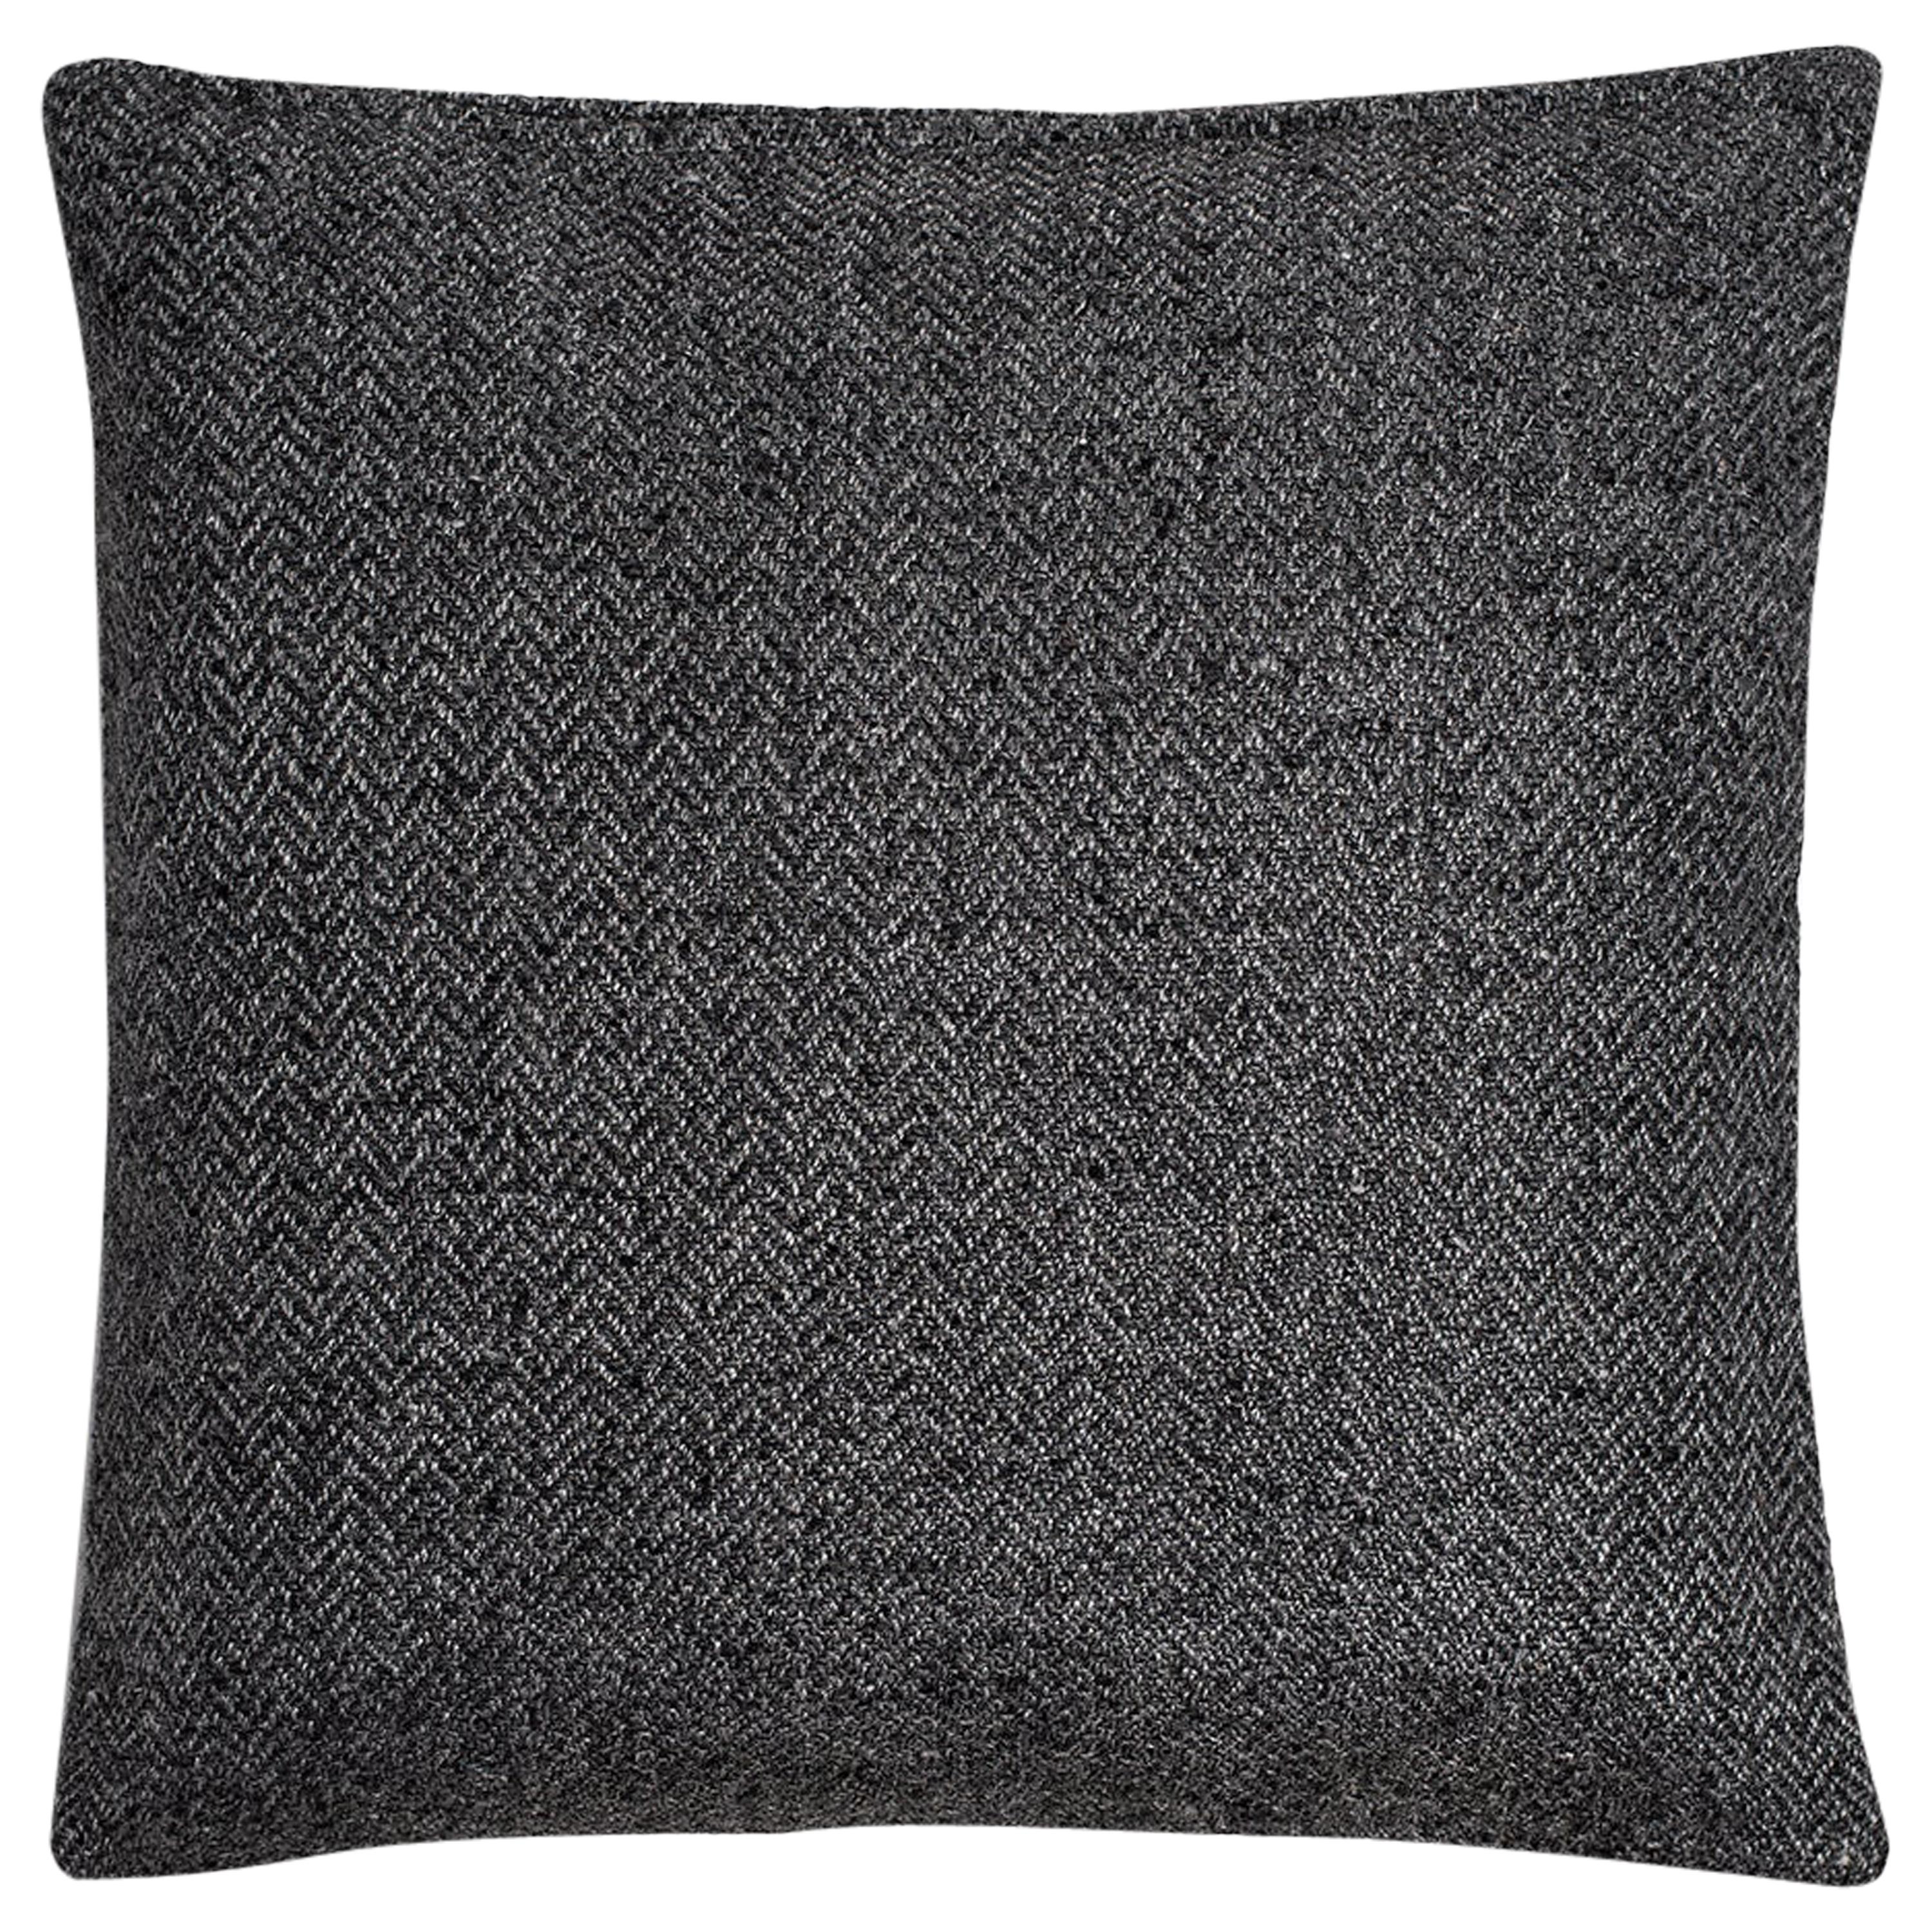 Ben Soleimani Chevron Pillow - Charcoal 26"x26" For Sale